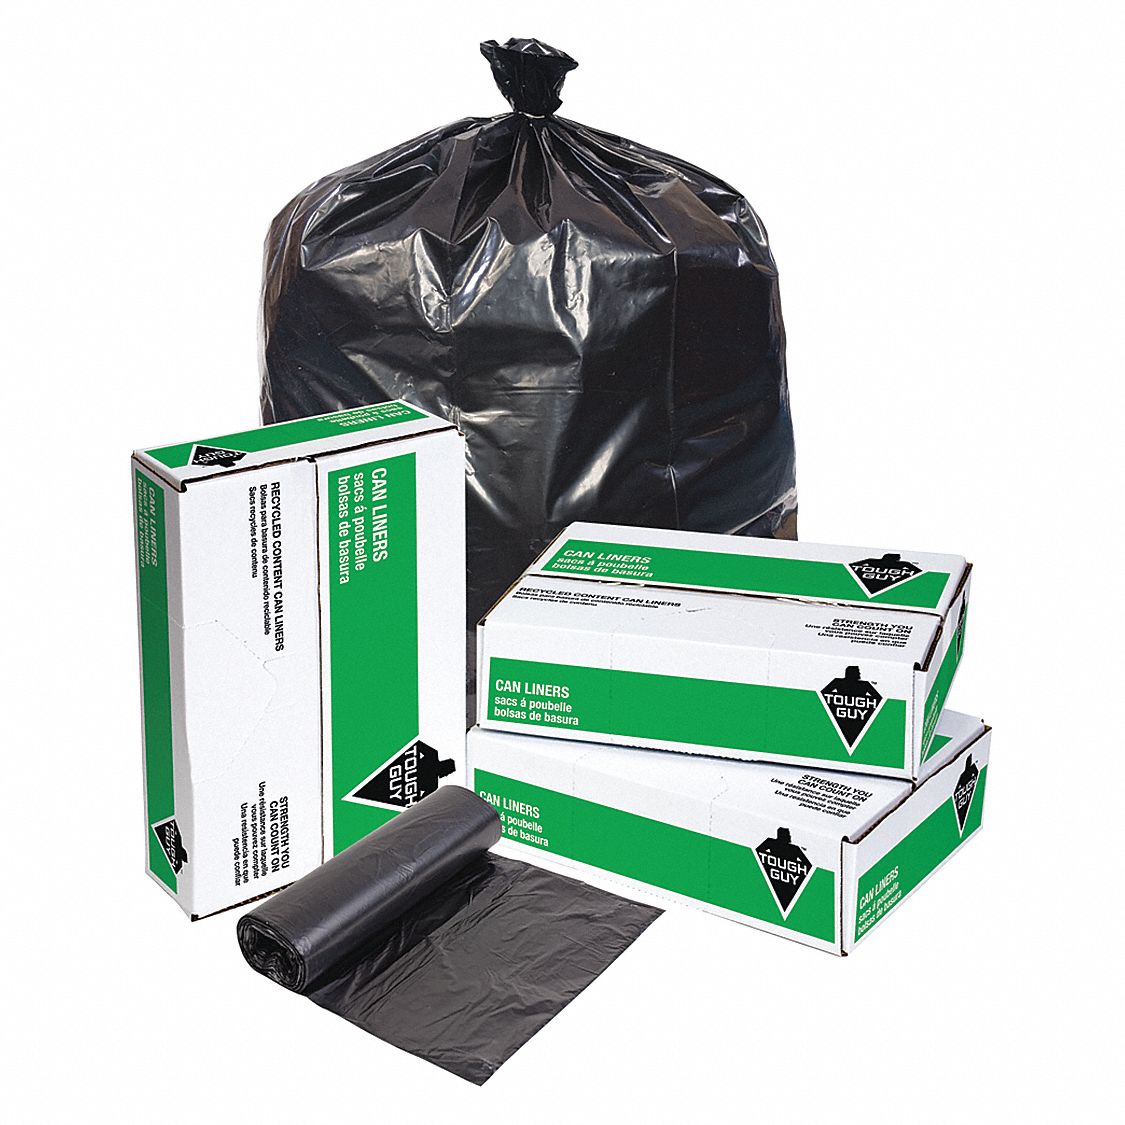 33 Gallon LDPE / HDPE Garbage bags Tuff Bags– ANS Plastics Corp